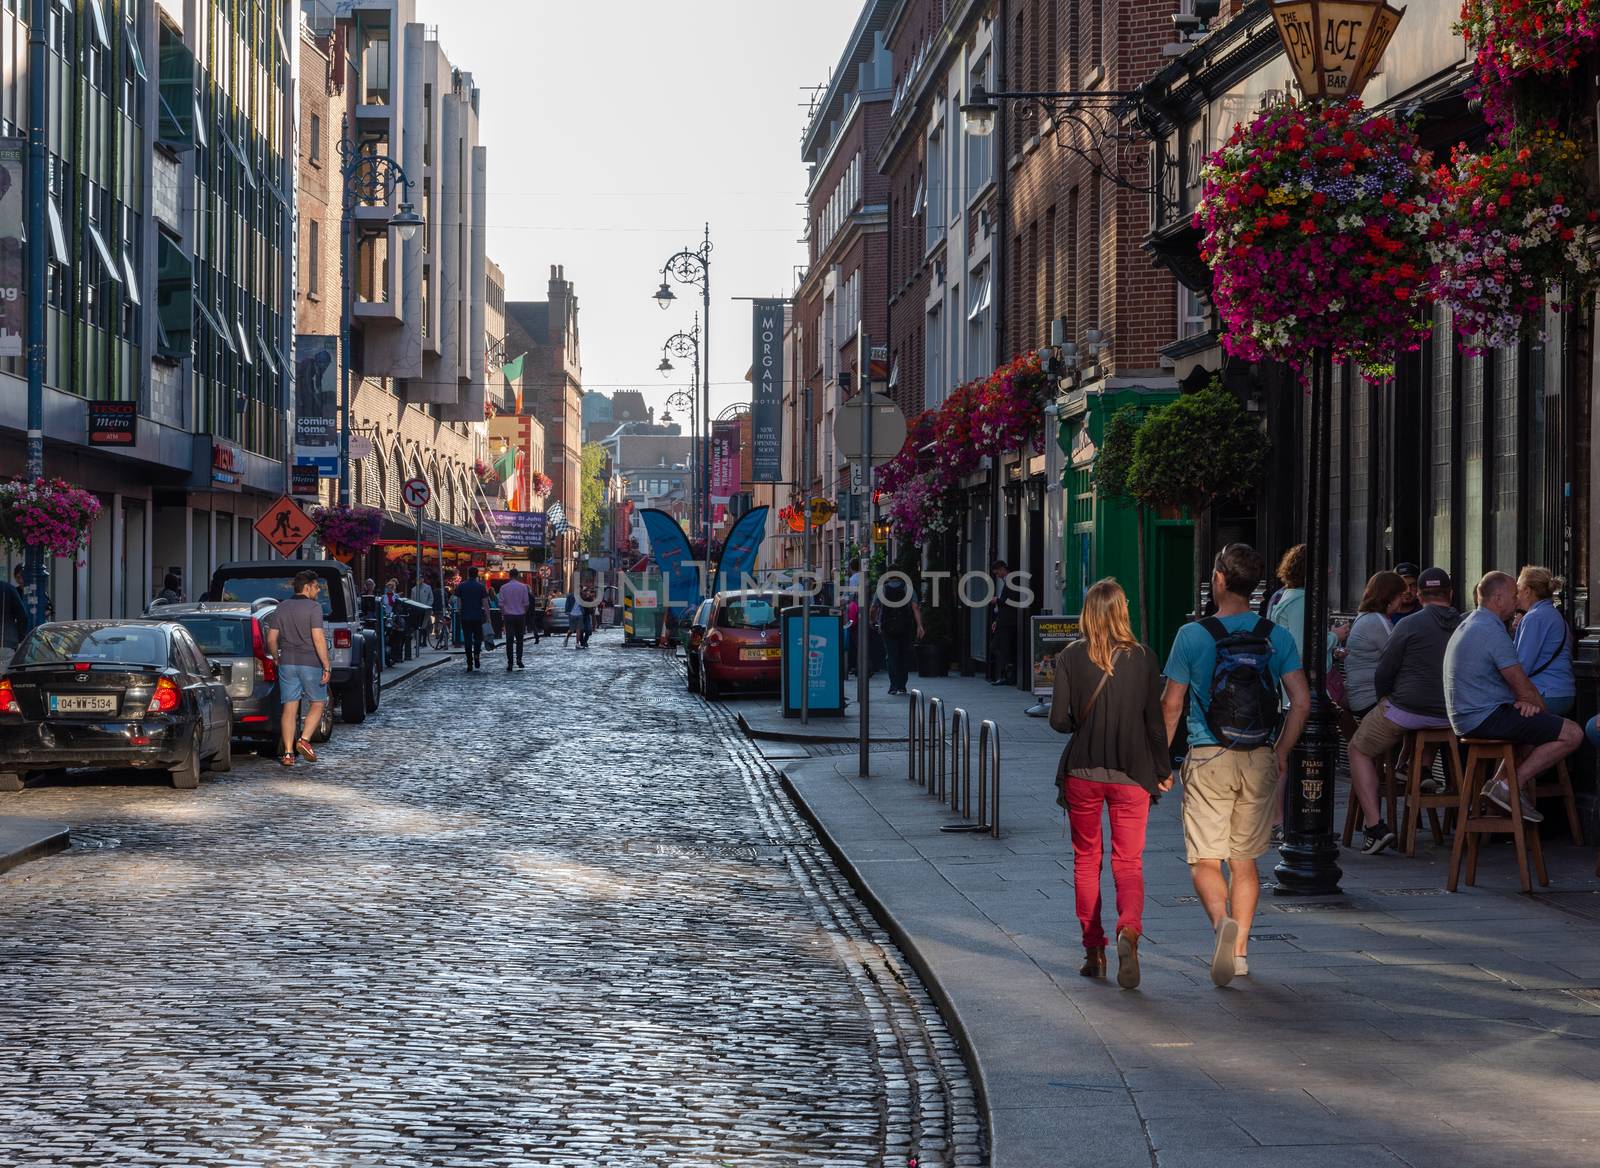 Nightlife in Dublin Ireland by jfbenning